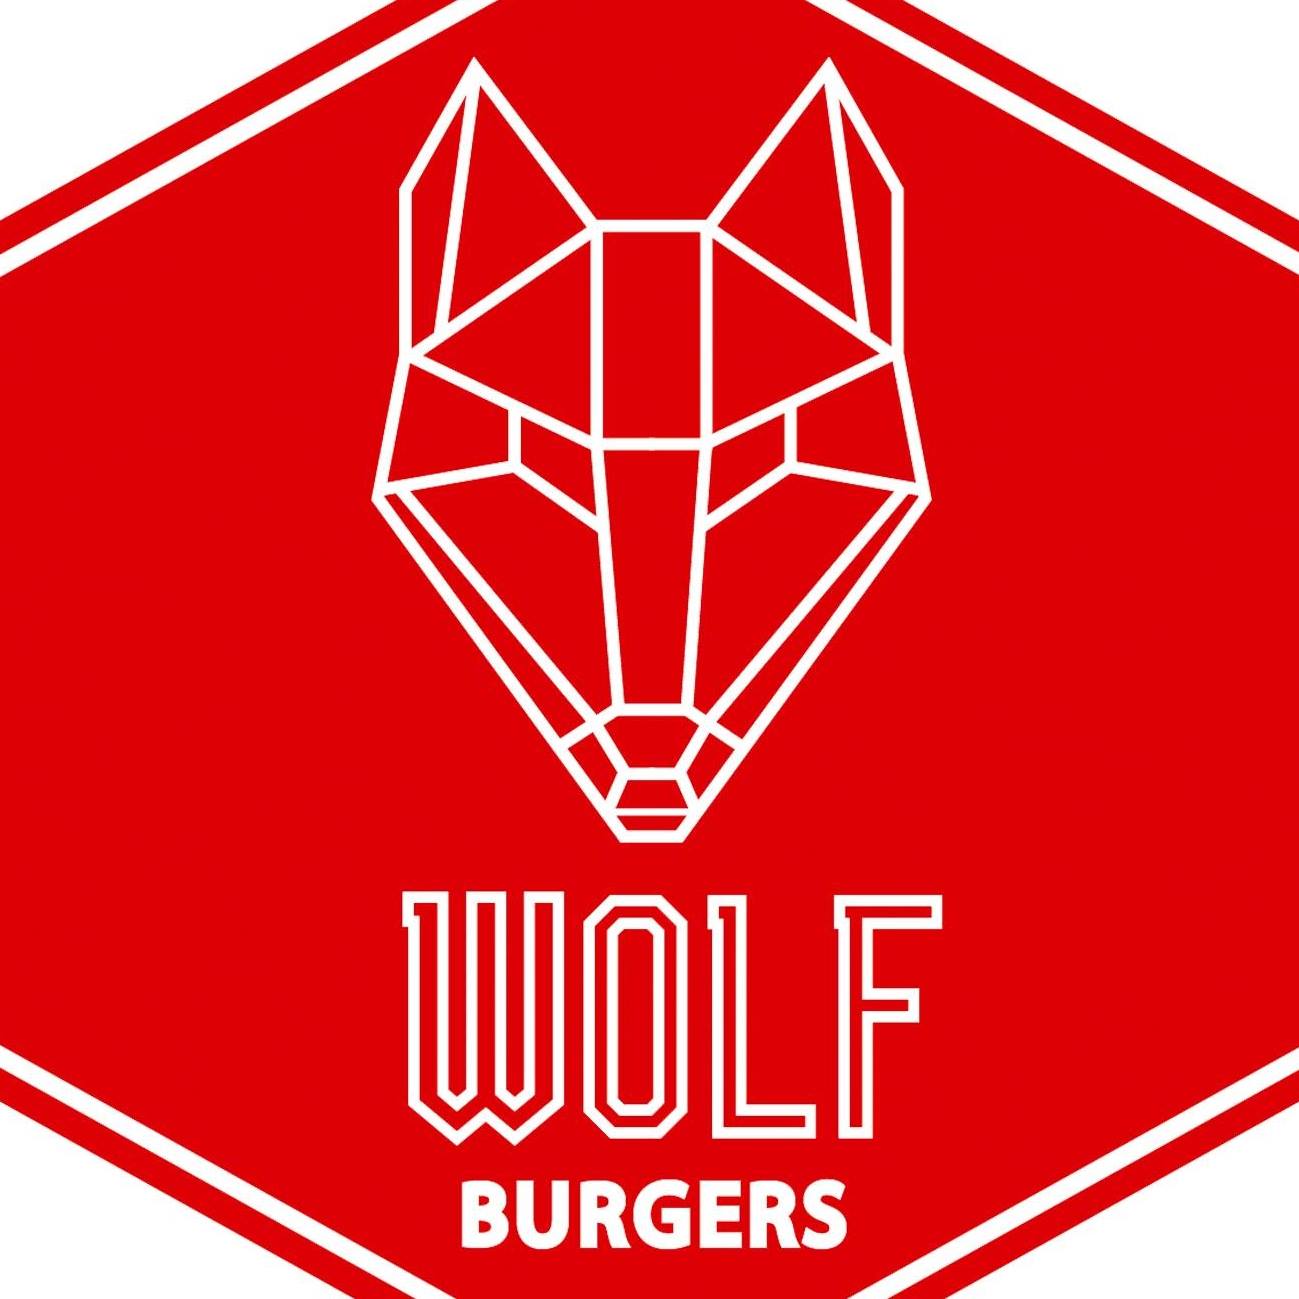 $4 Cash Voucher at Wolf Burgers - Get Deals, Cashback and Rewards with ShopBack GO